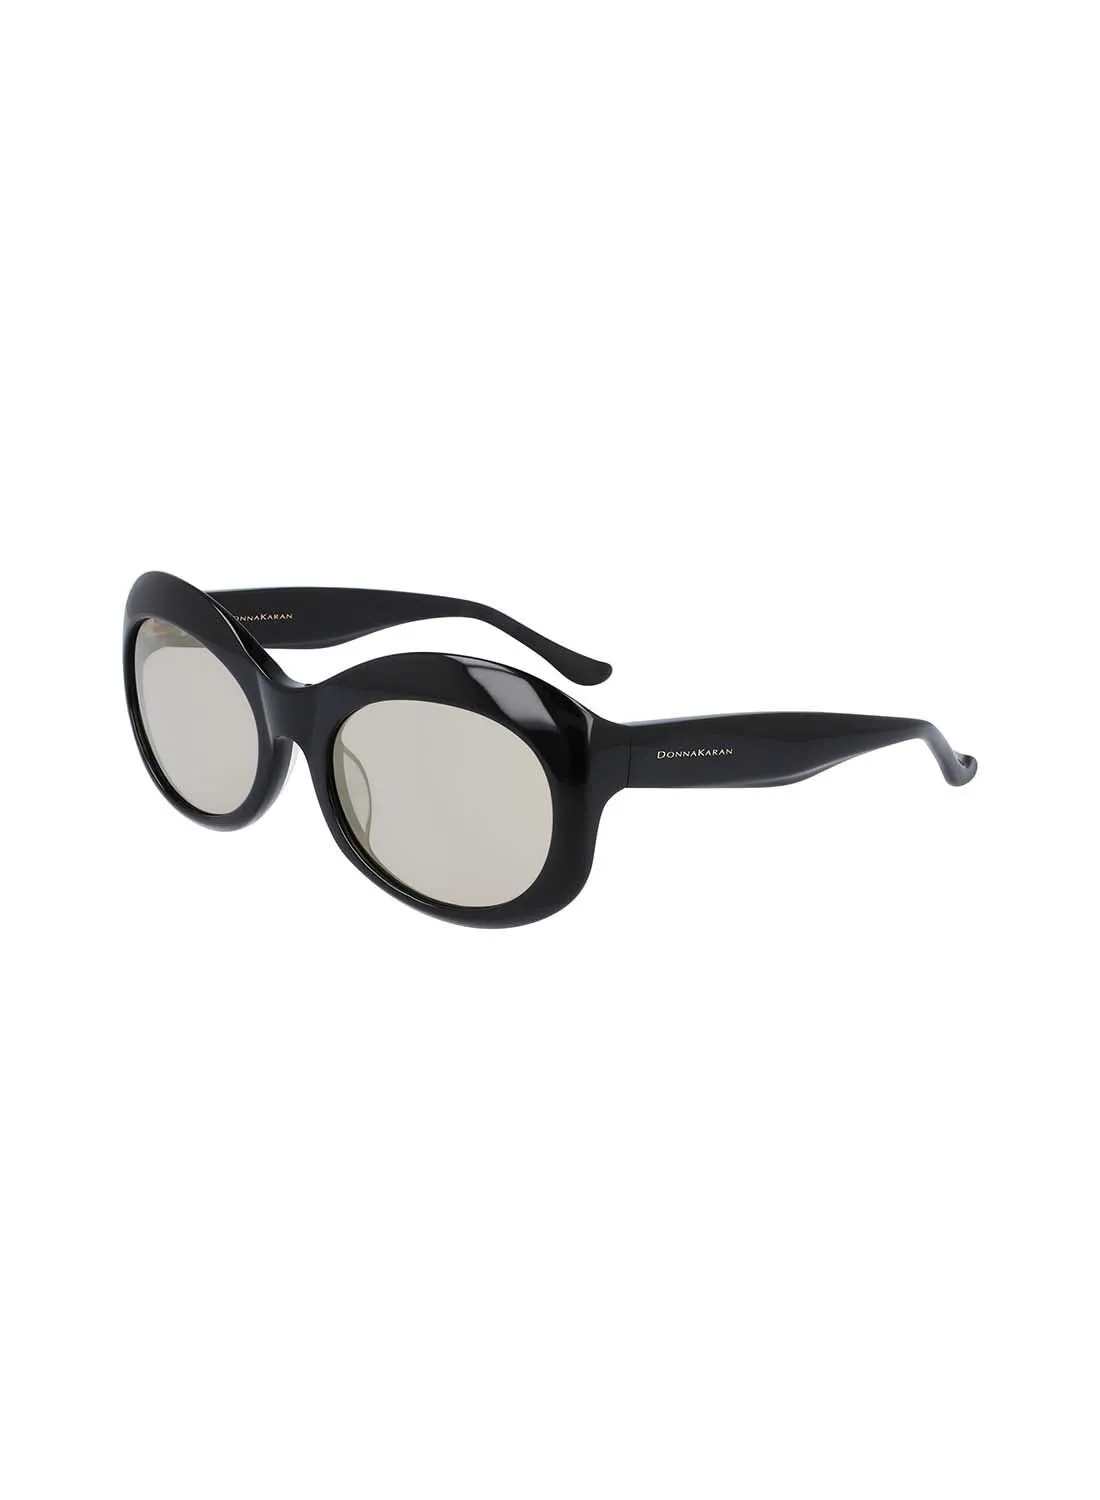 Donna Karan Full Rim Acetate Oval Sunglasses DO506S 5620 (001)